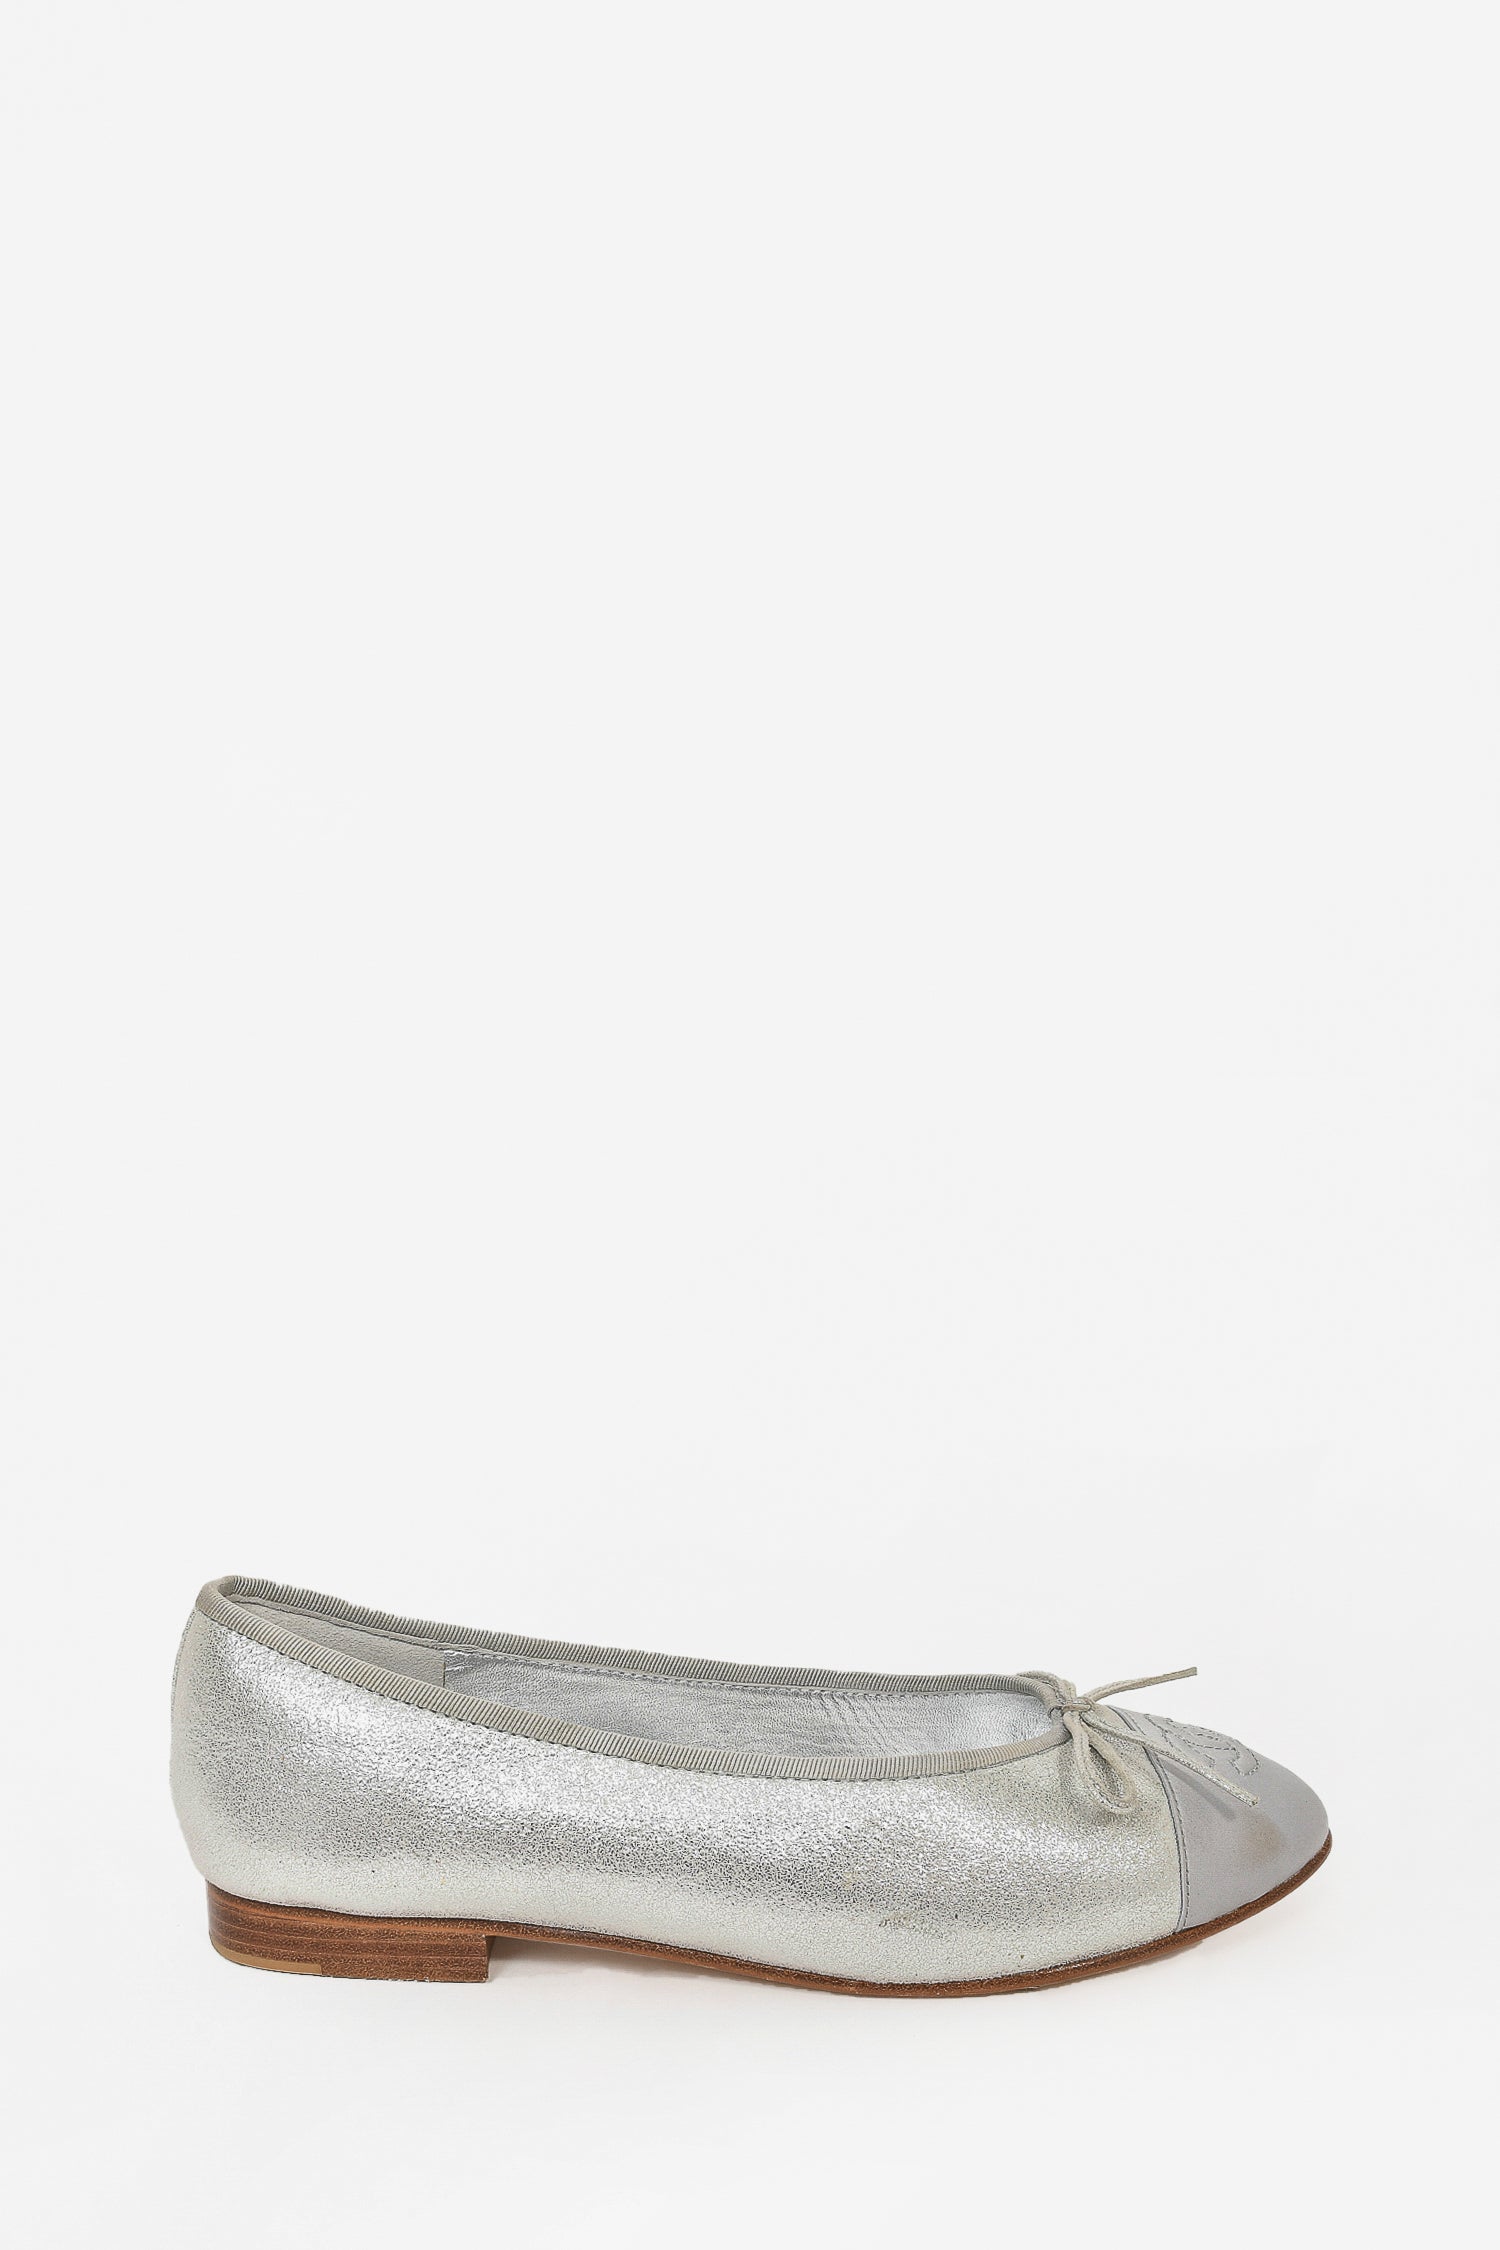 Chanel Size 38 Metallic Python Ballet Flat – The Little Bird